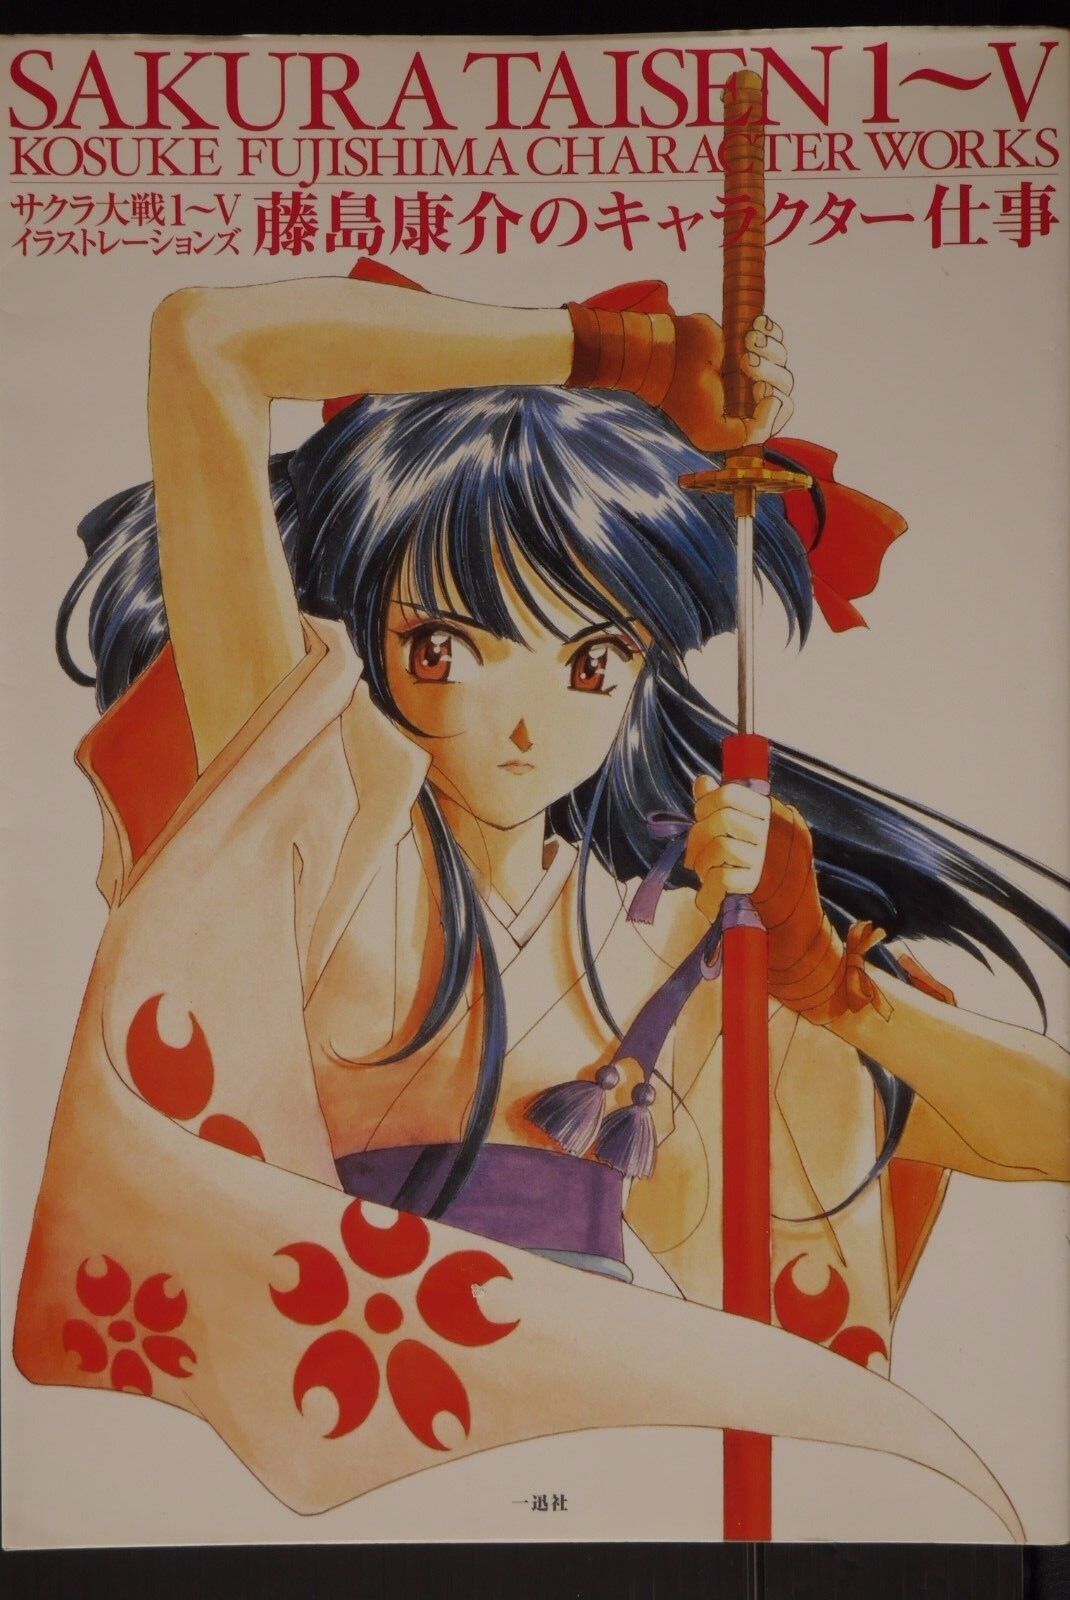 Sakura Wars I~V - Kosuke Fujishima Character Works Art Book Japan